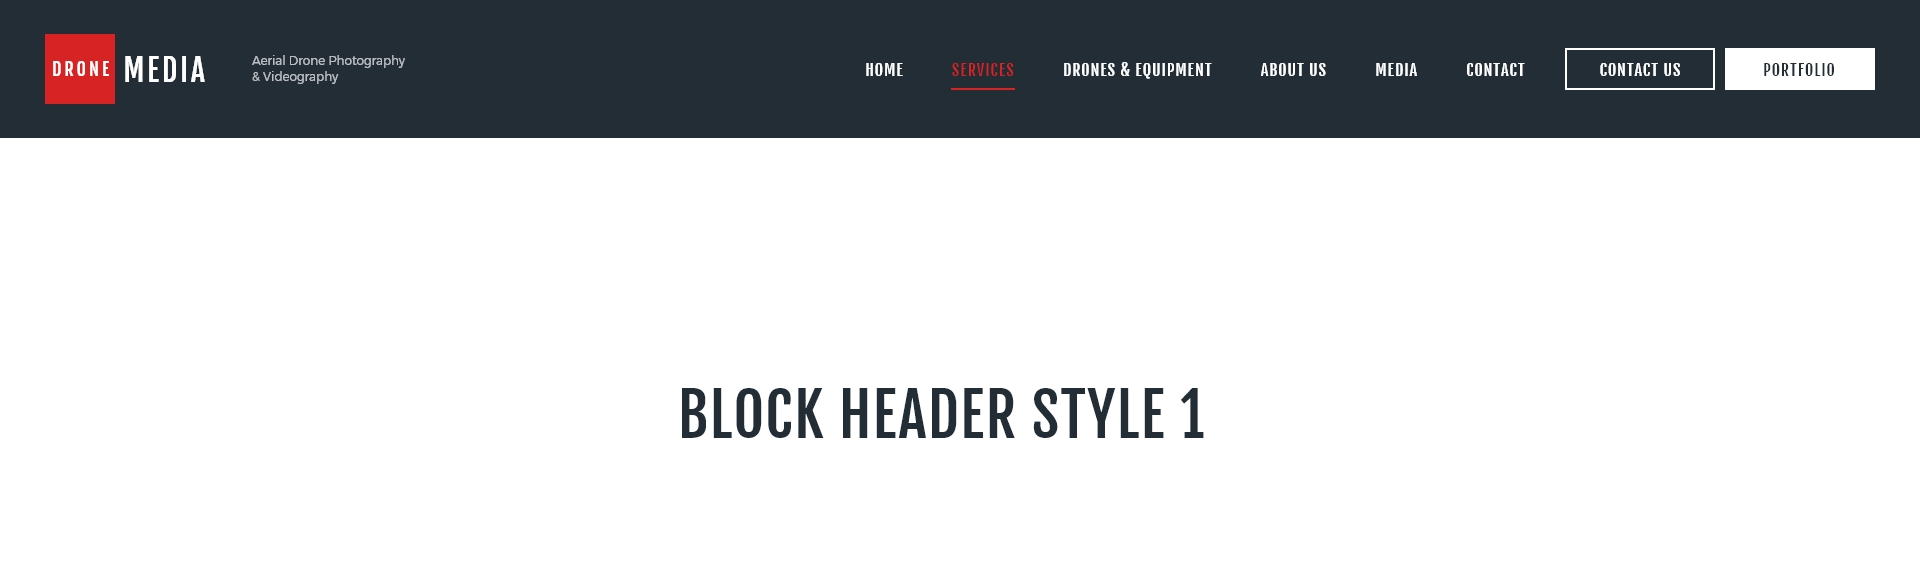 Block header style 1